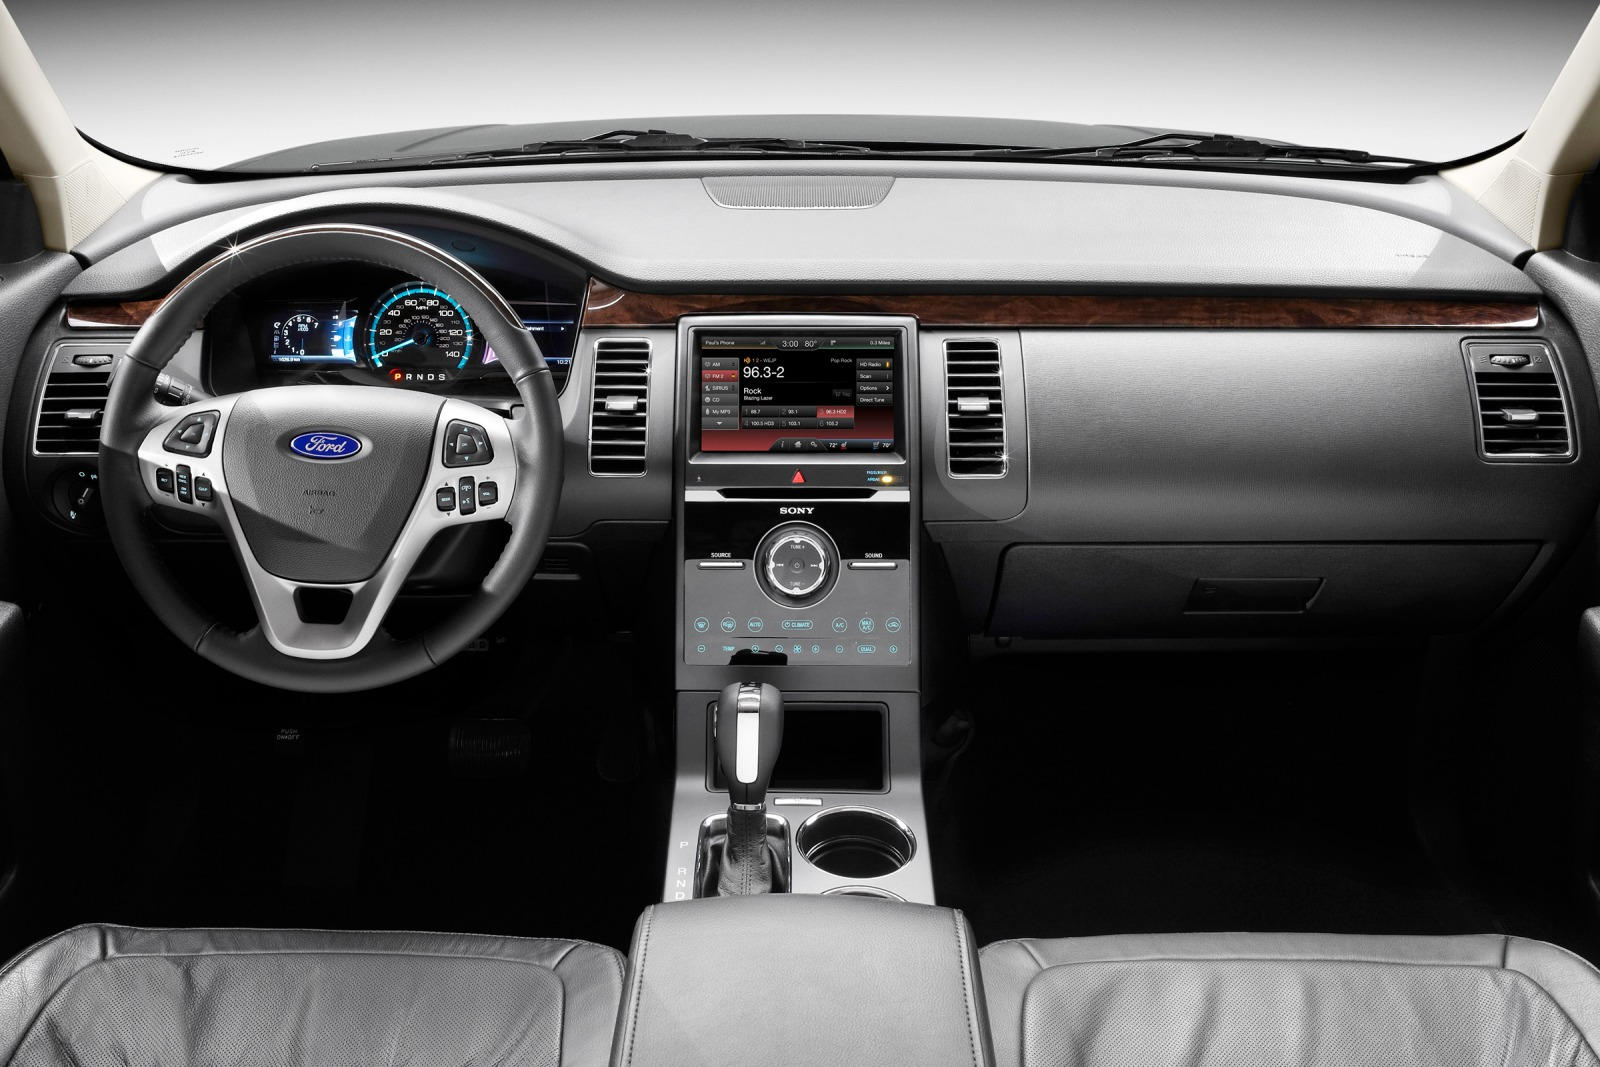 Ford Flex interior - Cockpit